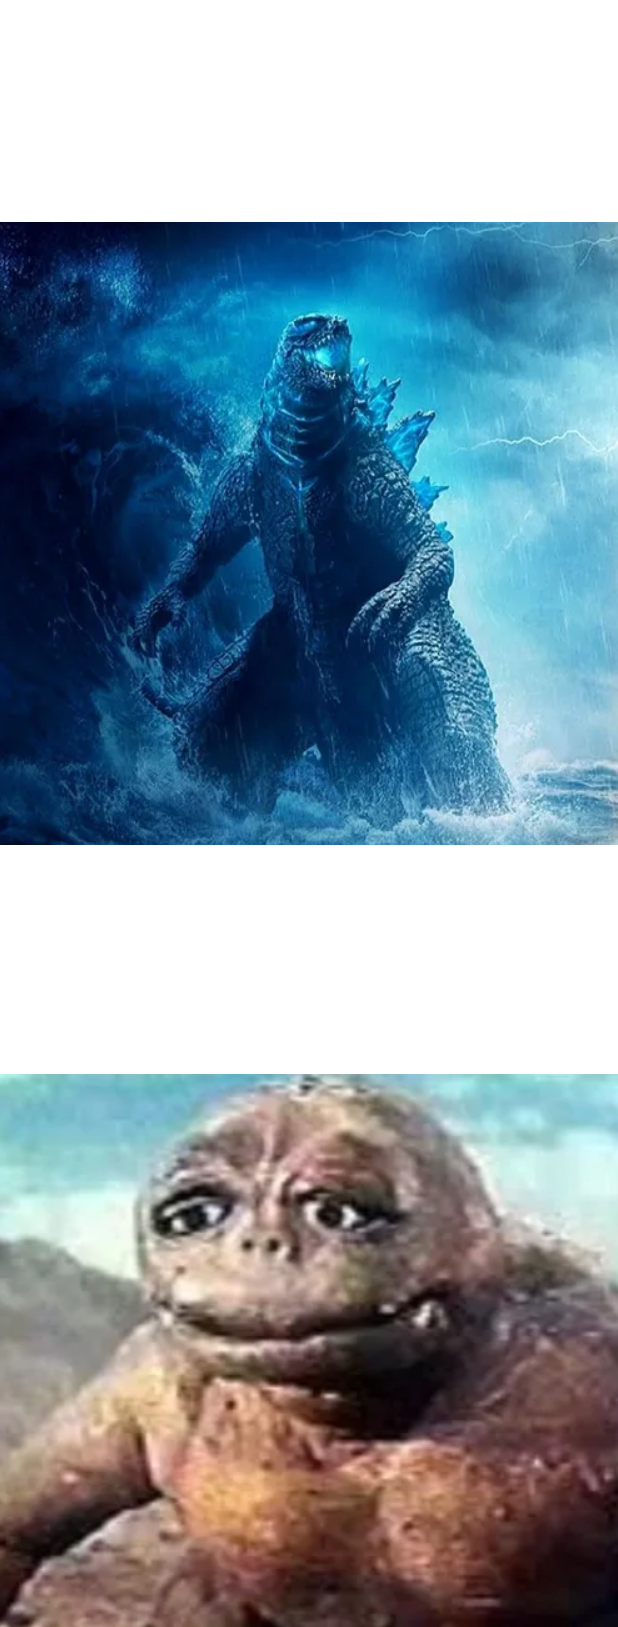 High Quality Godzilla Comparison Blank Meme Template